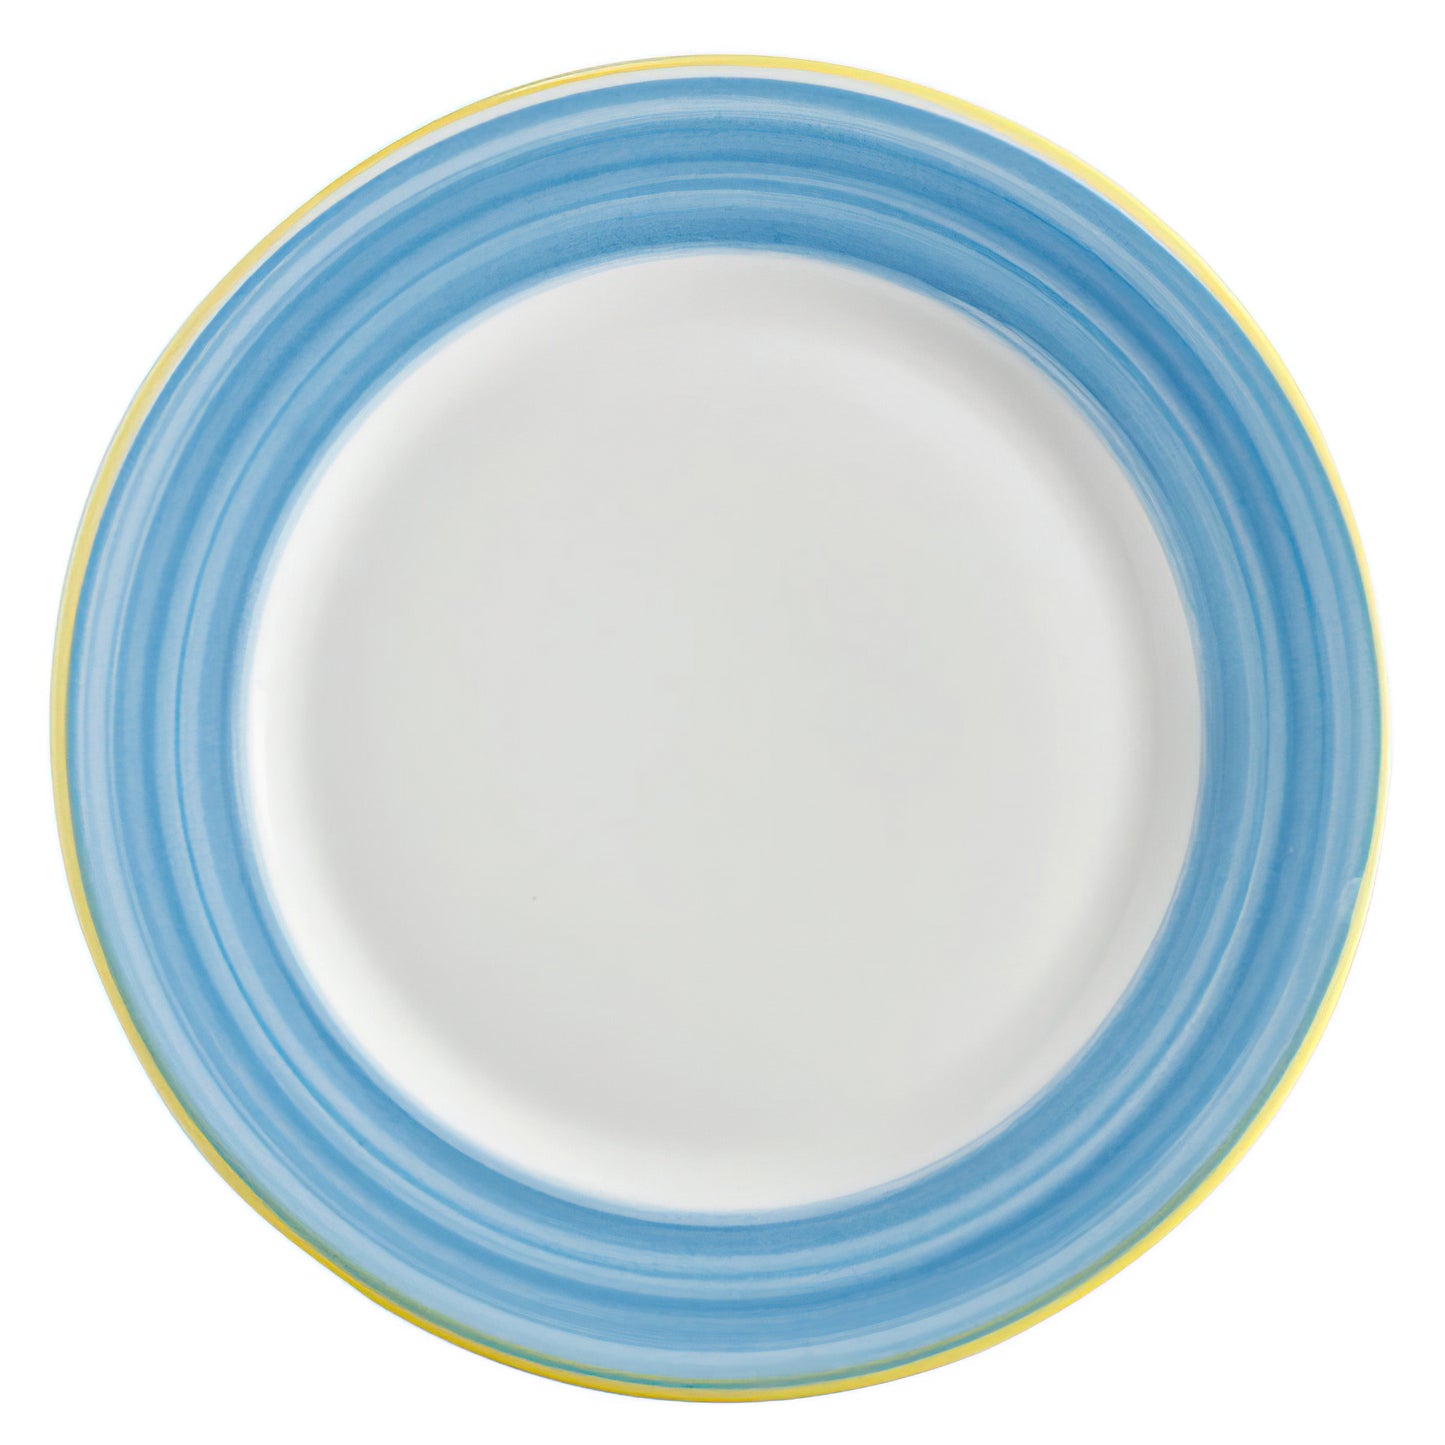 12 1/4" Blue Porcelain Rolled Edge Plate, Corona Calypso (Stocked) (12 Pack)